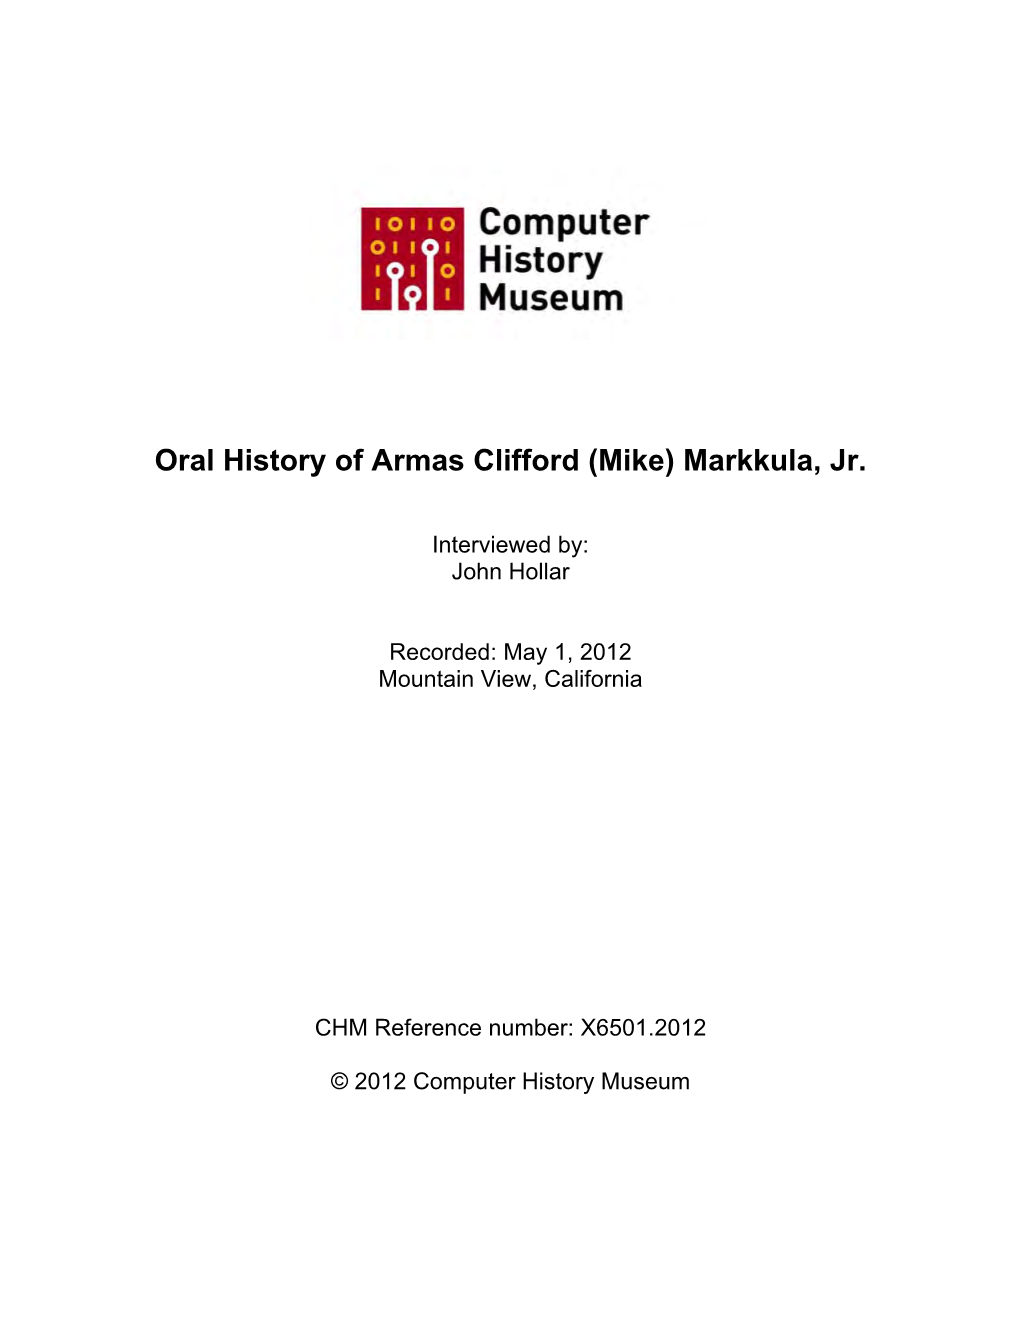 Oral History of Armas Clifford (Mike) Markkula Jr.; 2012-05-01